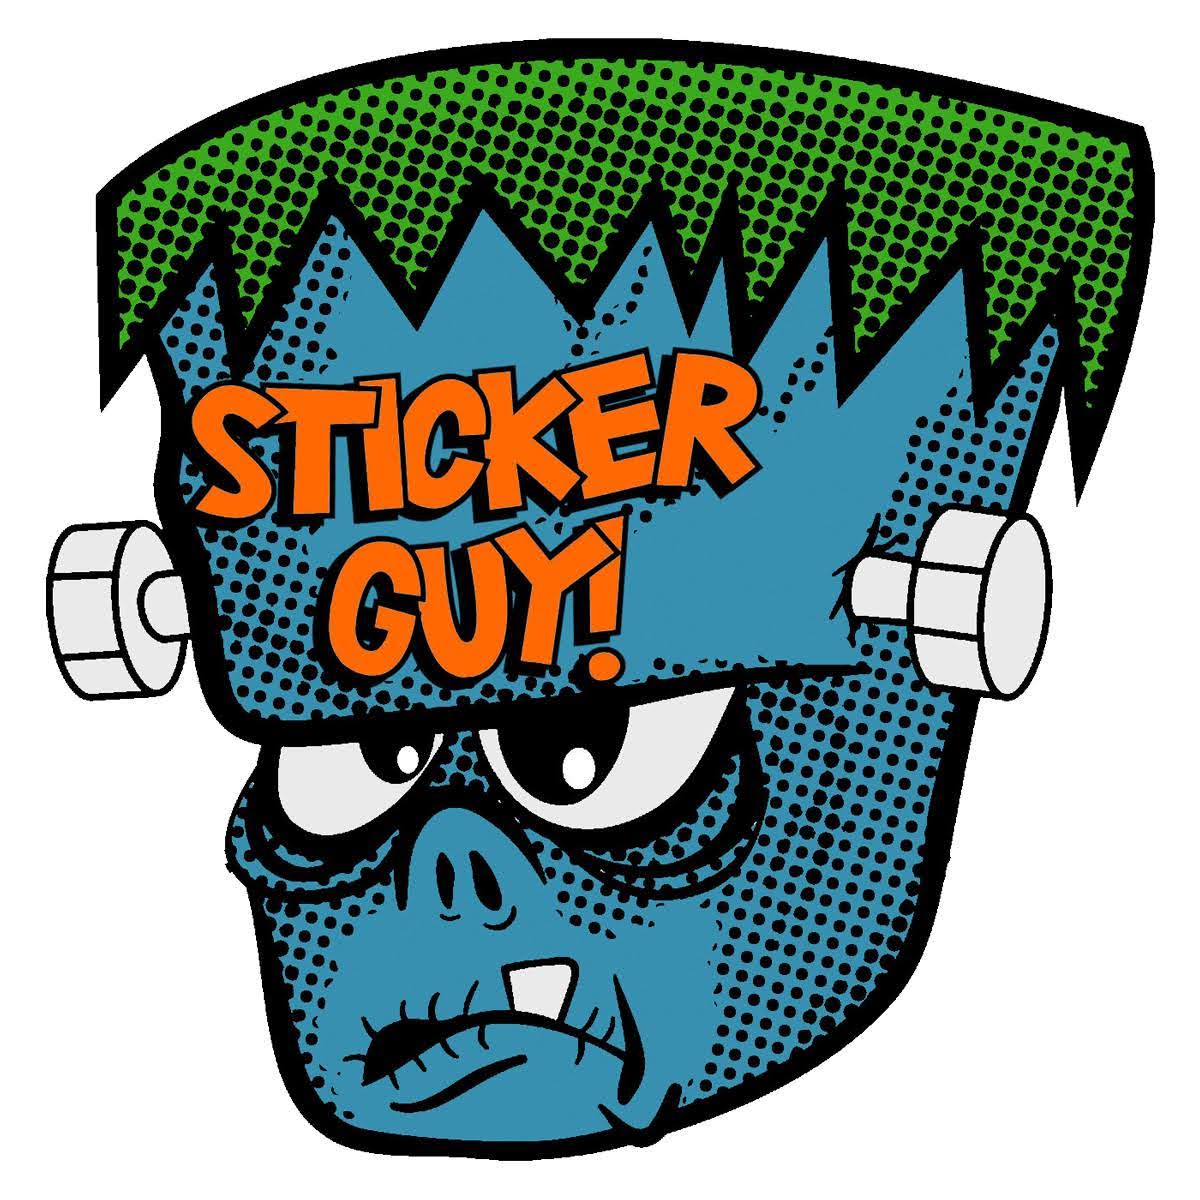 Sticker Guy! High quality custom stickers, low prices!